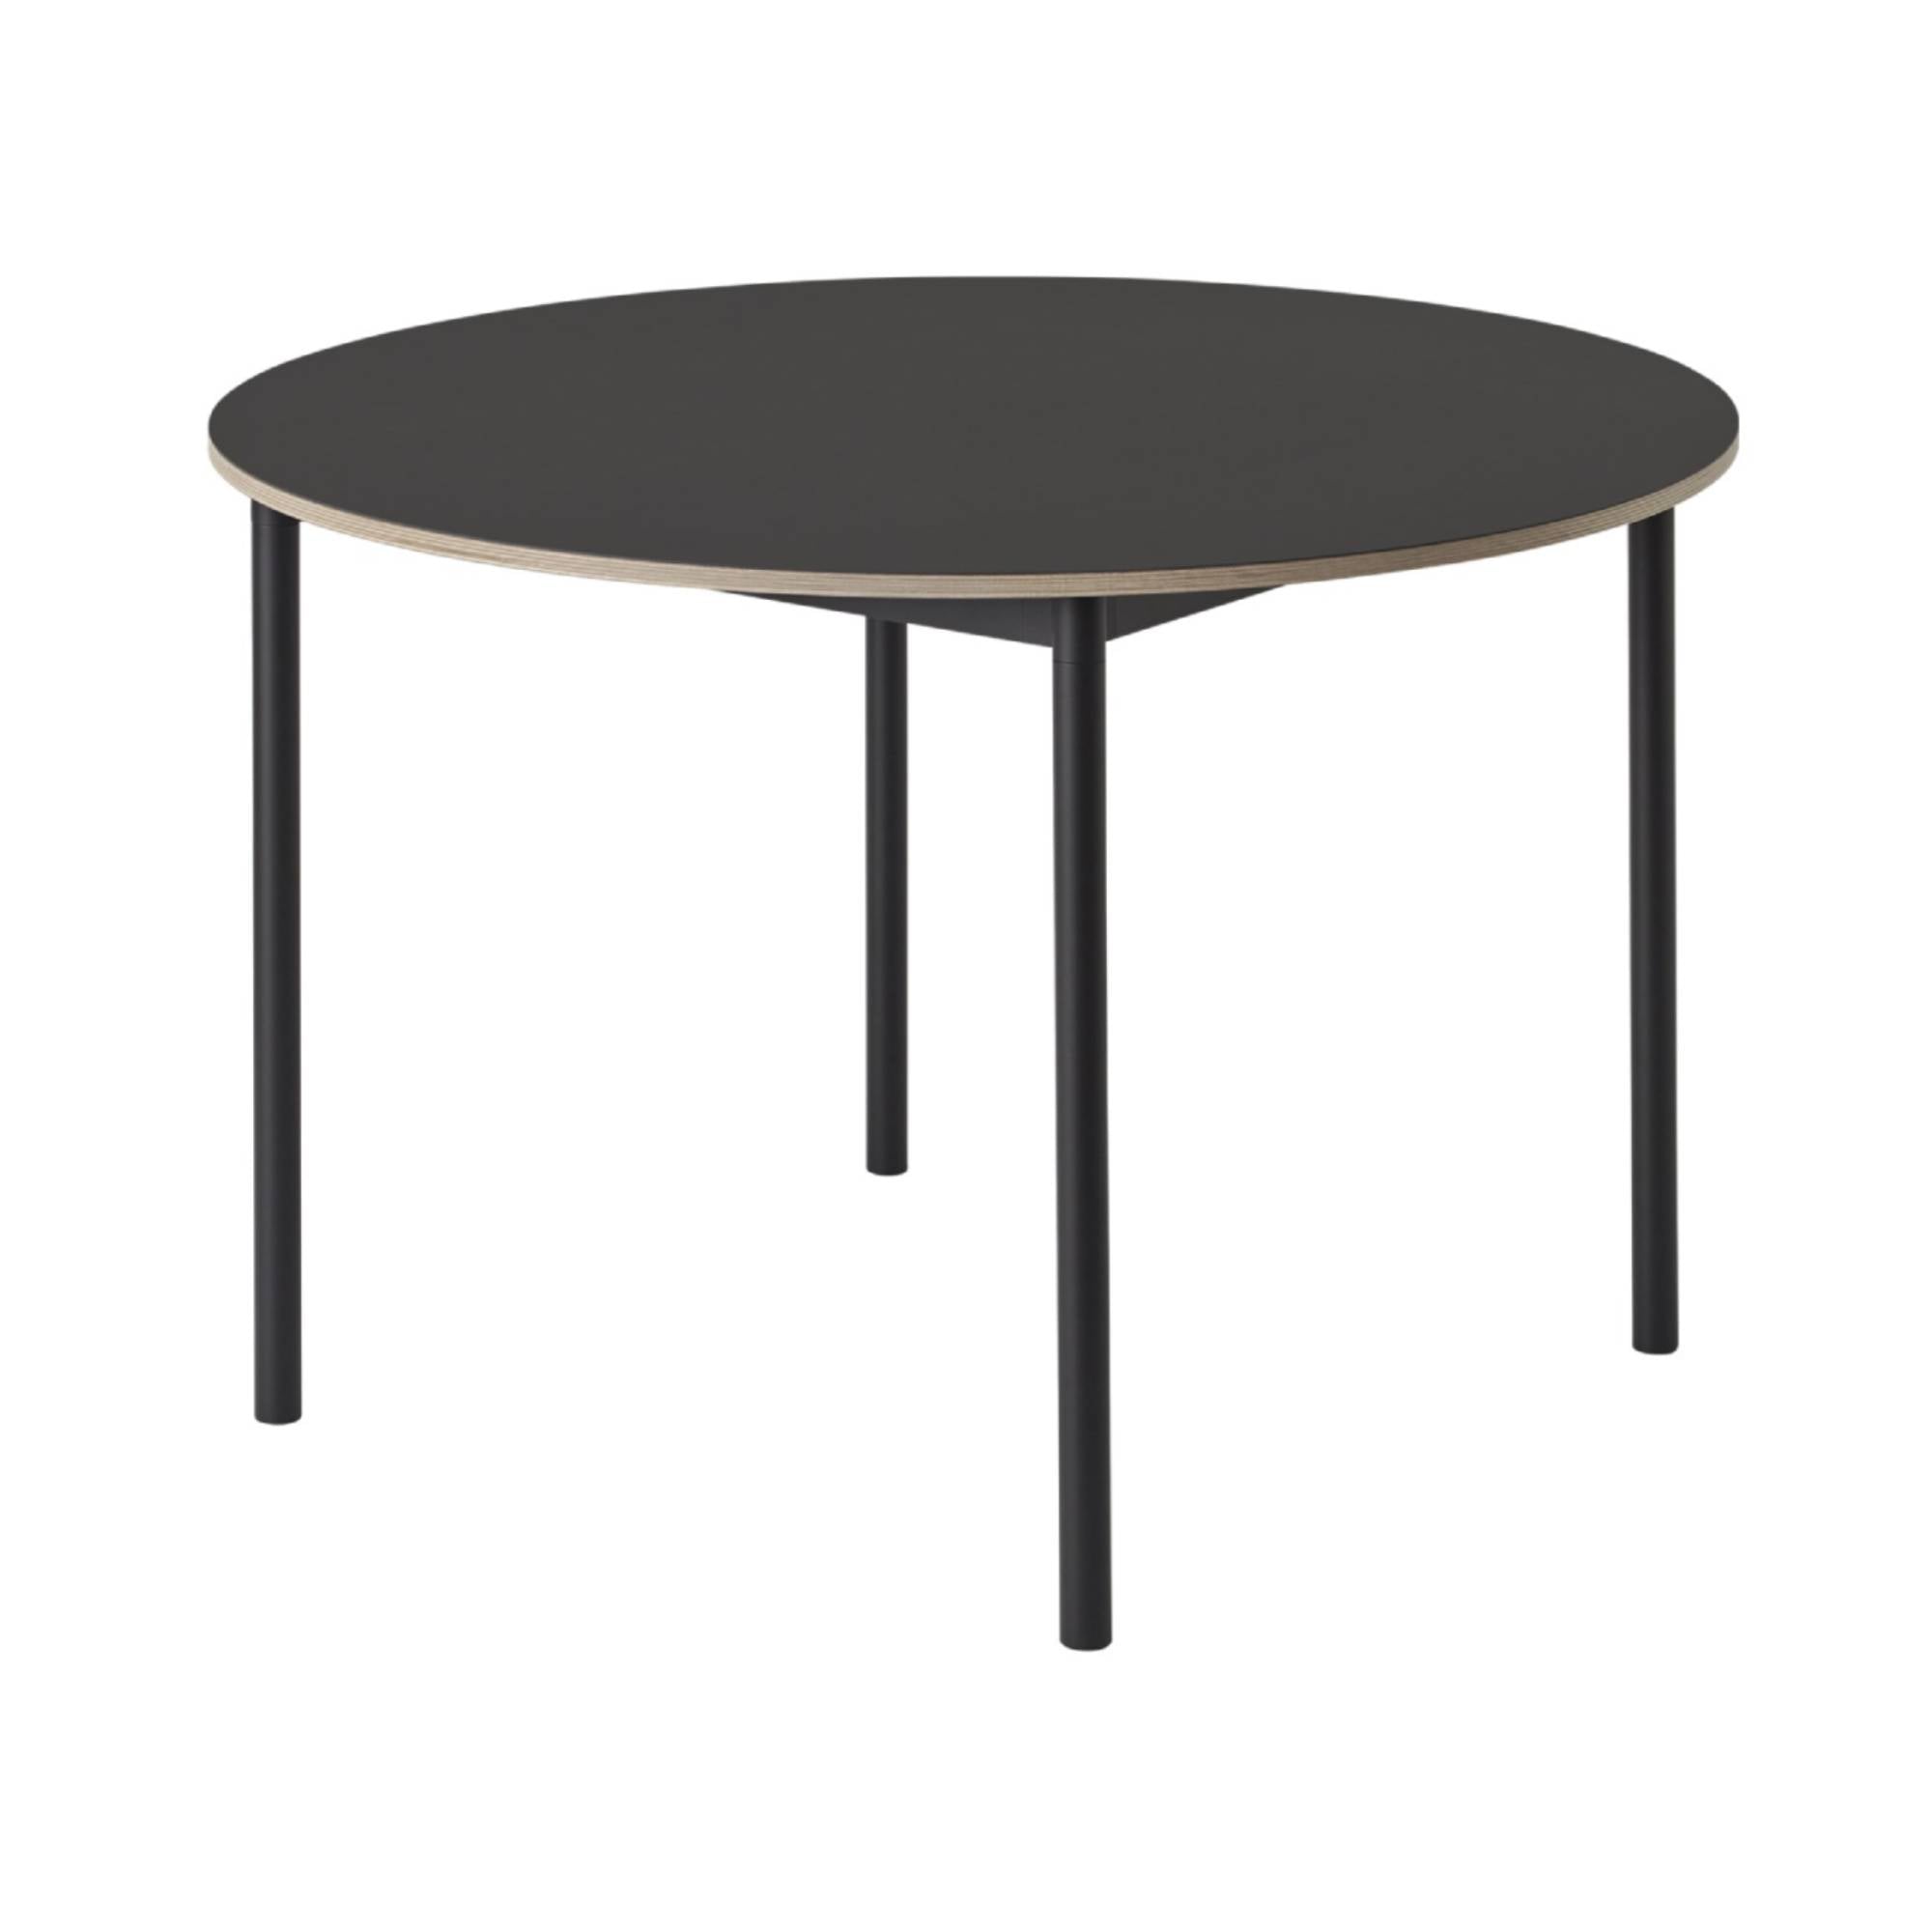 Base Table: Round + Black Linoleum + Plywood Edge + Black